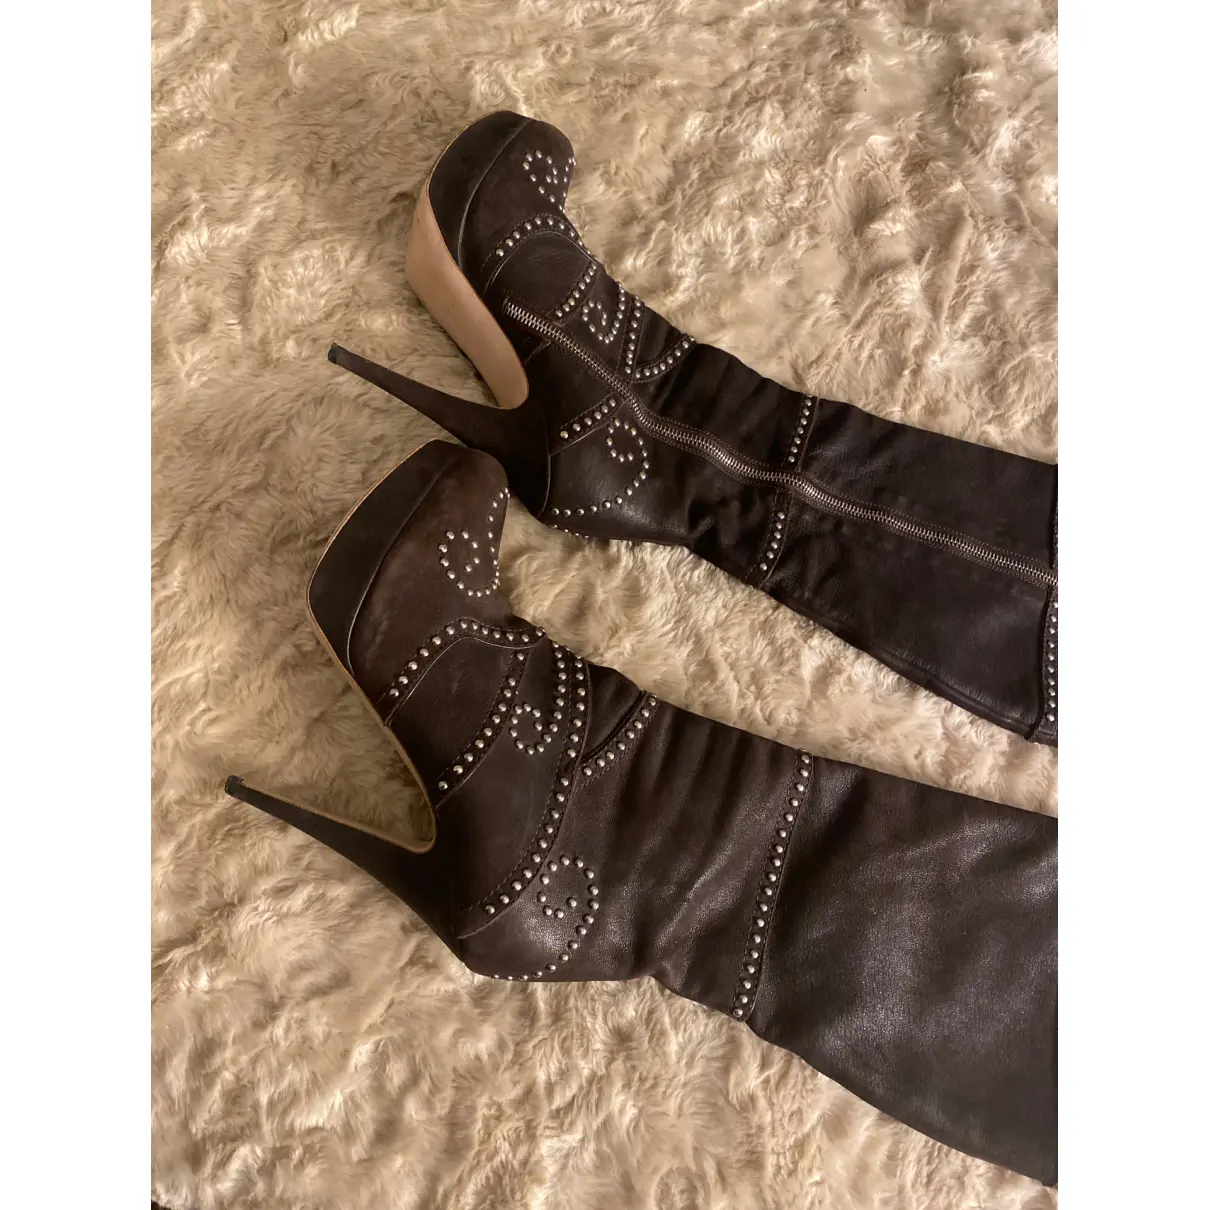 Buy Miu Miu Leather boots online